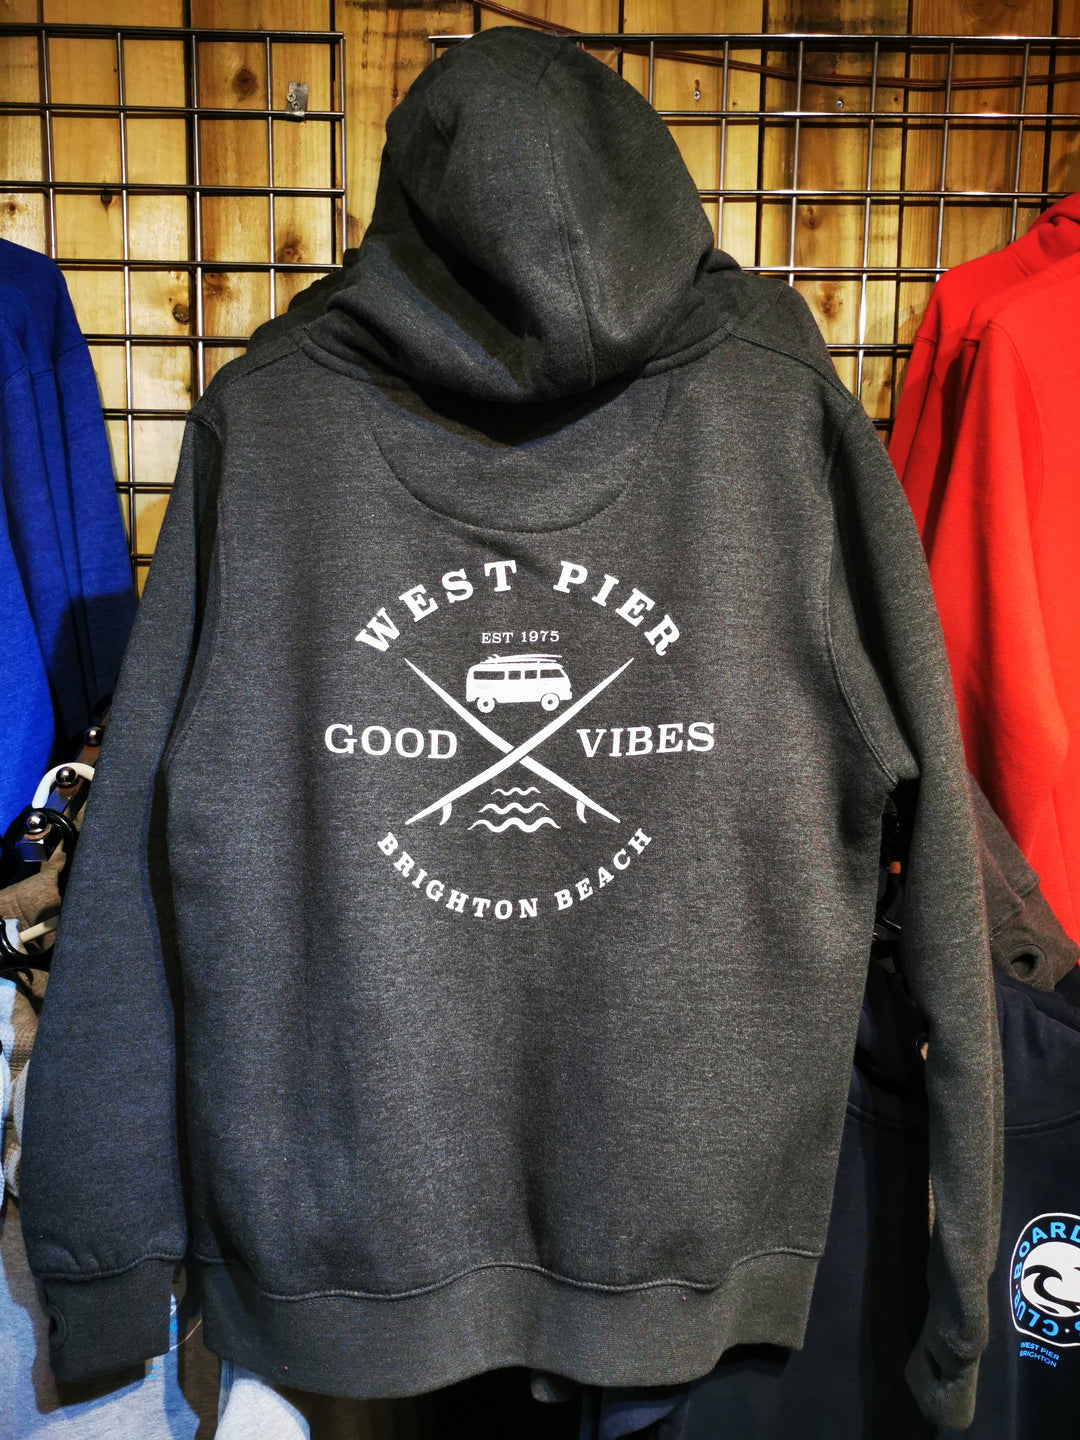 West Pier Hoodie - 'West Pier - Good Vibes - Brighton Beach' Camper Van Logo - Zip Front - Dark Grey